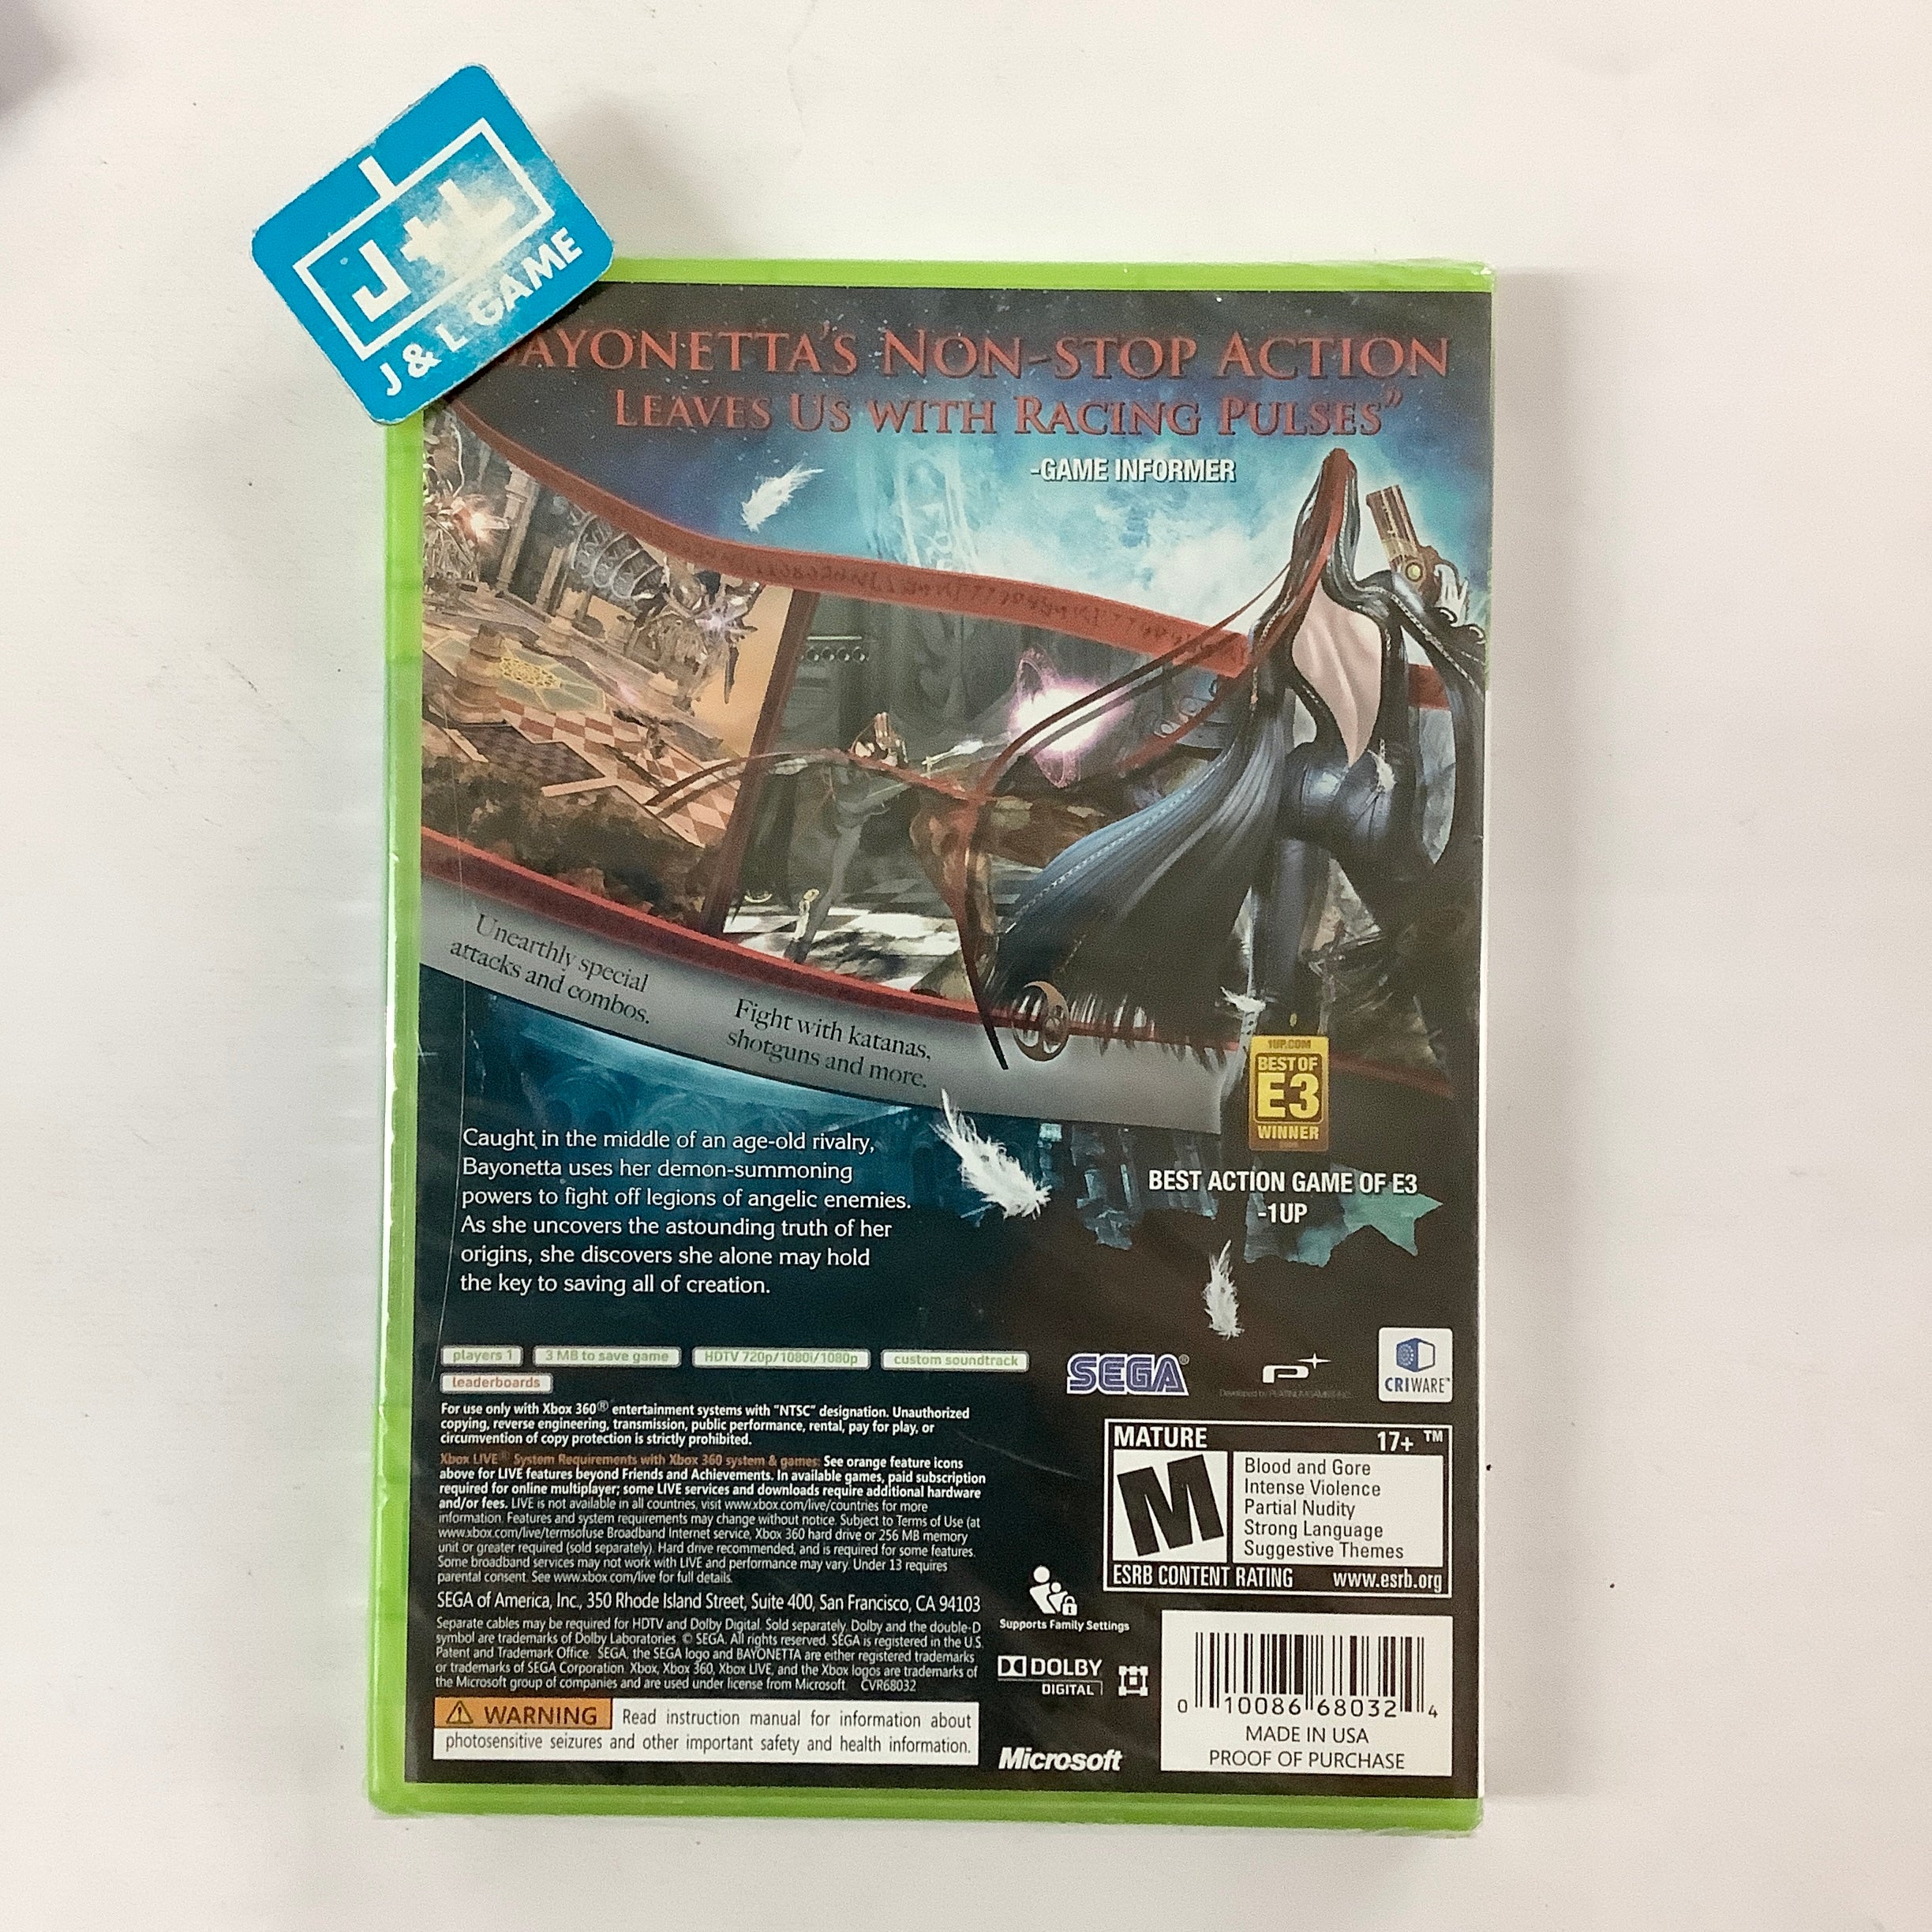 Bayonetta - Xbox 360 Video Games SEGA   